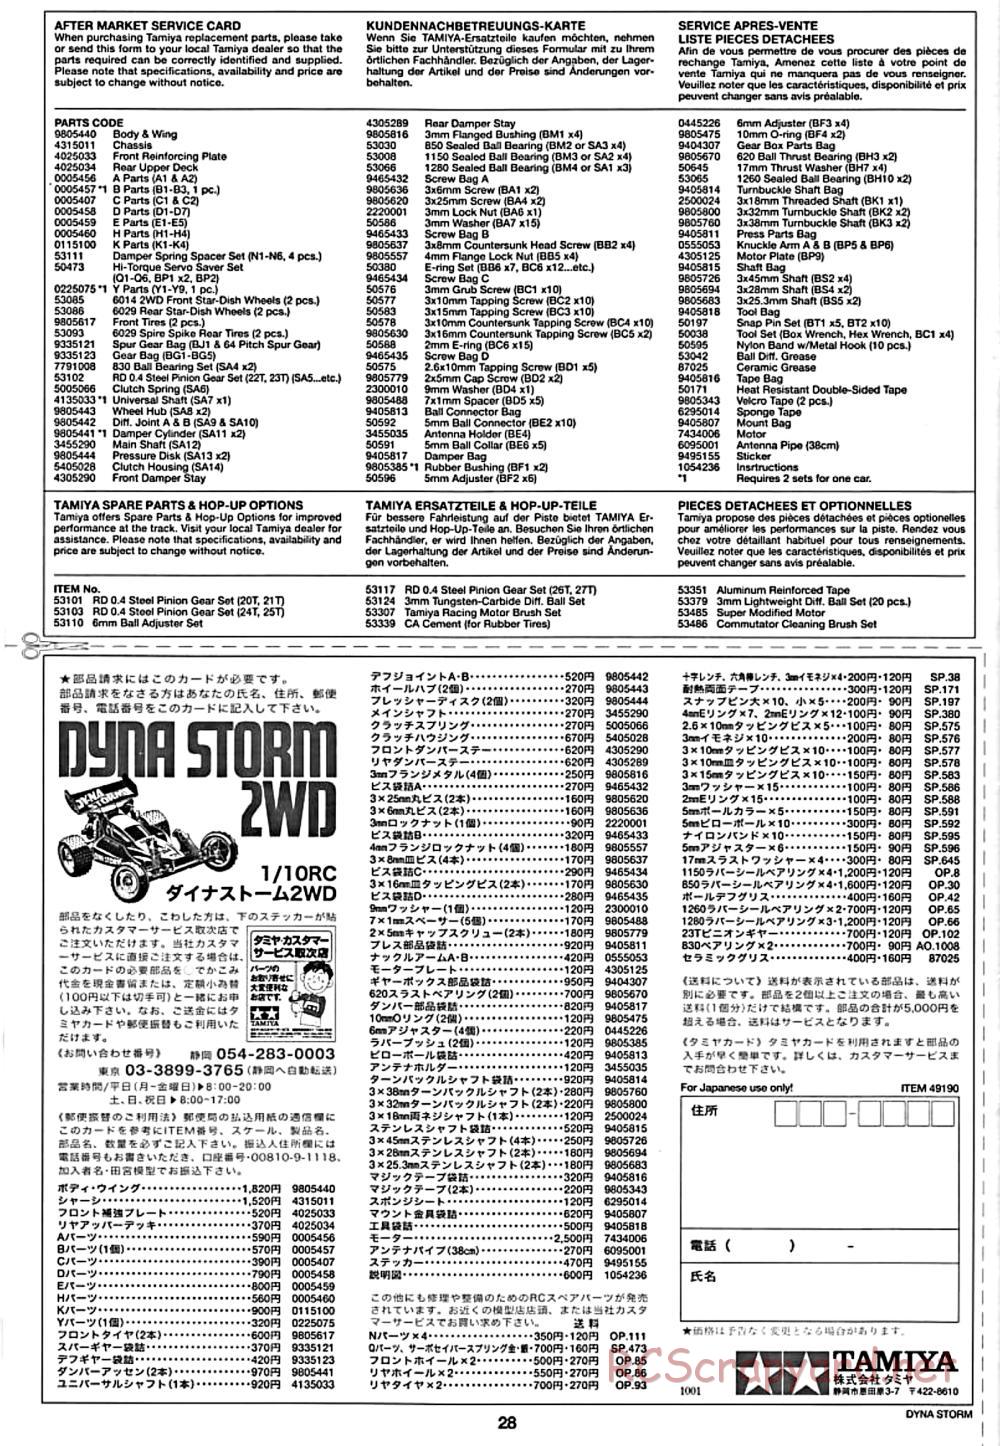 Tamiya - Dyna Storm Chassis - Manual - Page 28